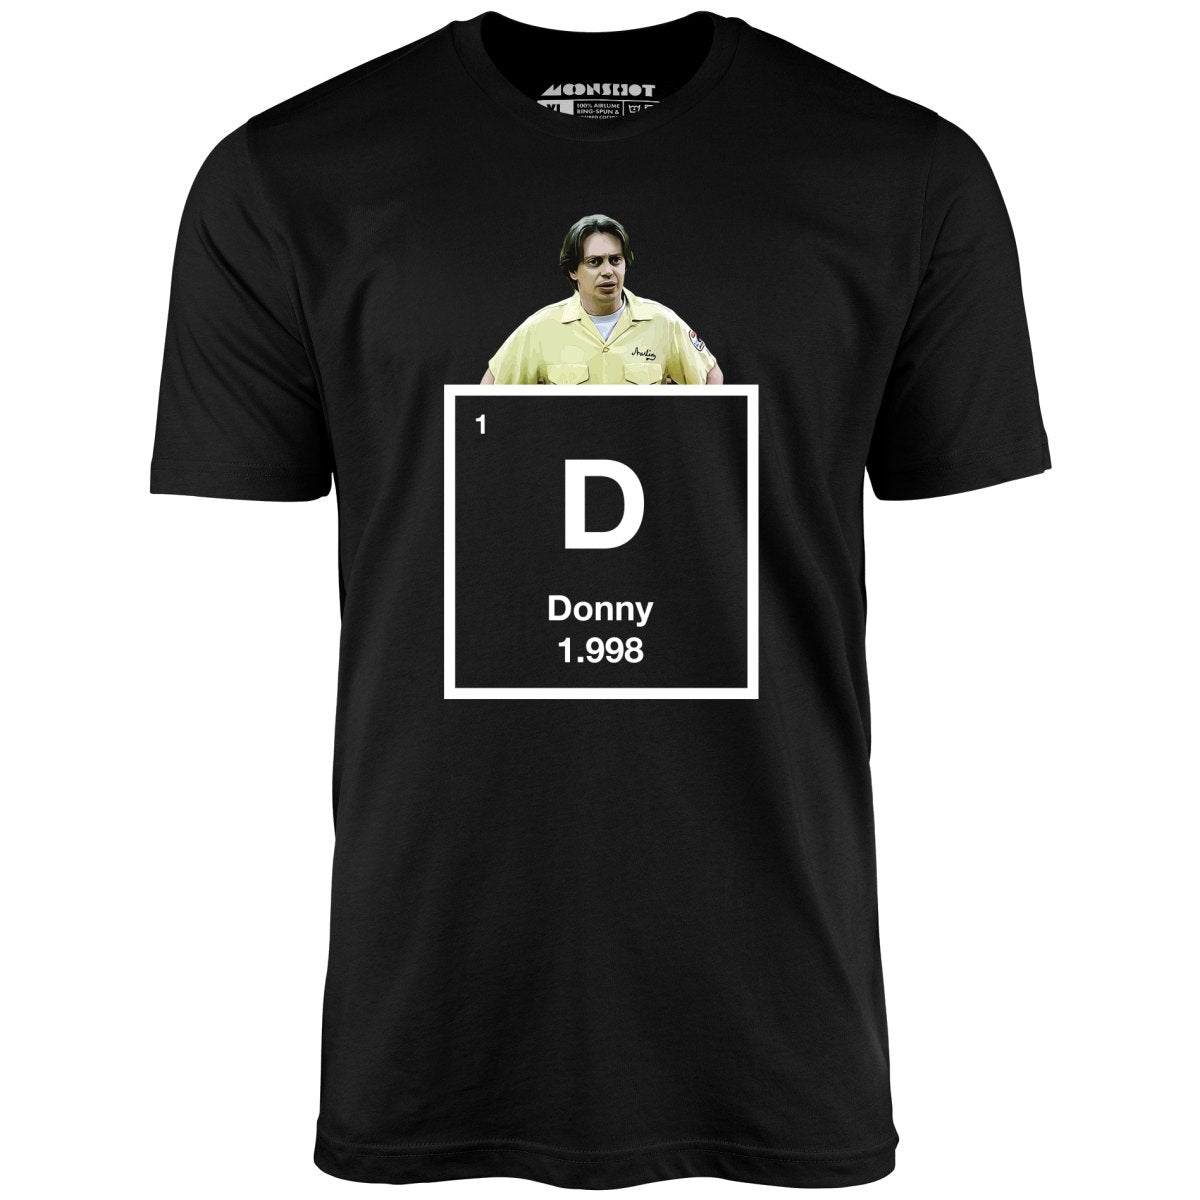 Donny Out of His Element - Big Lebowski - Unisex T-Shirt